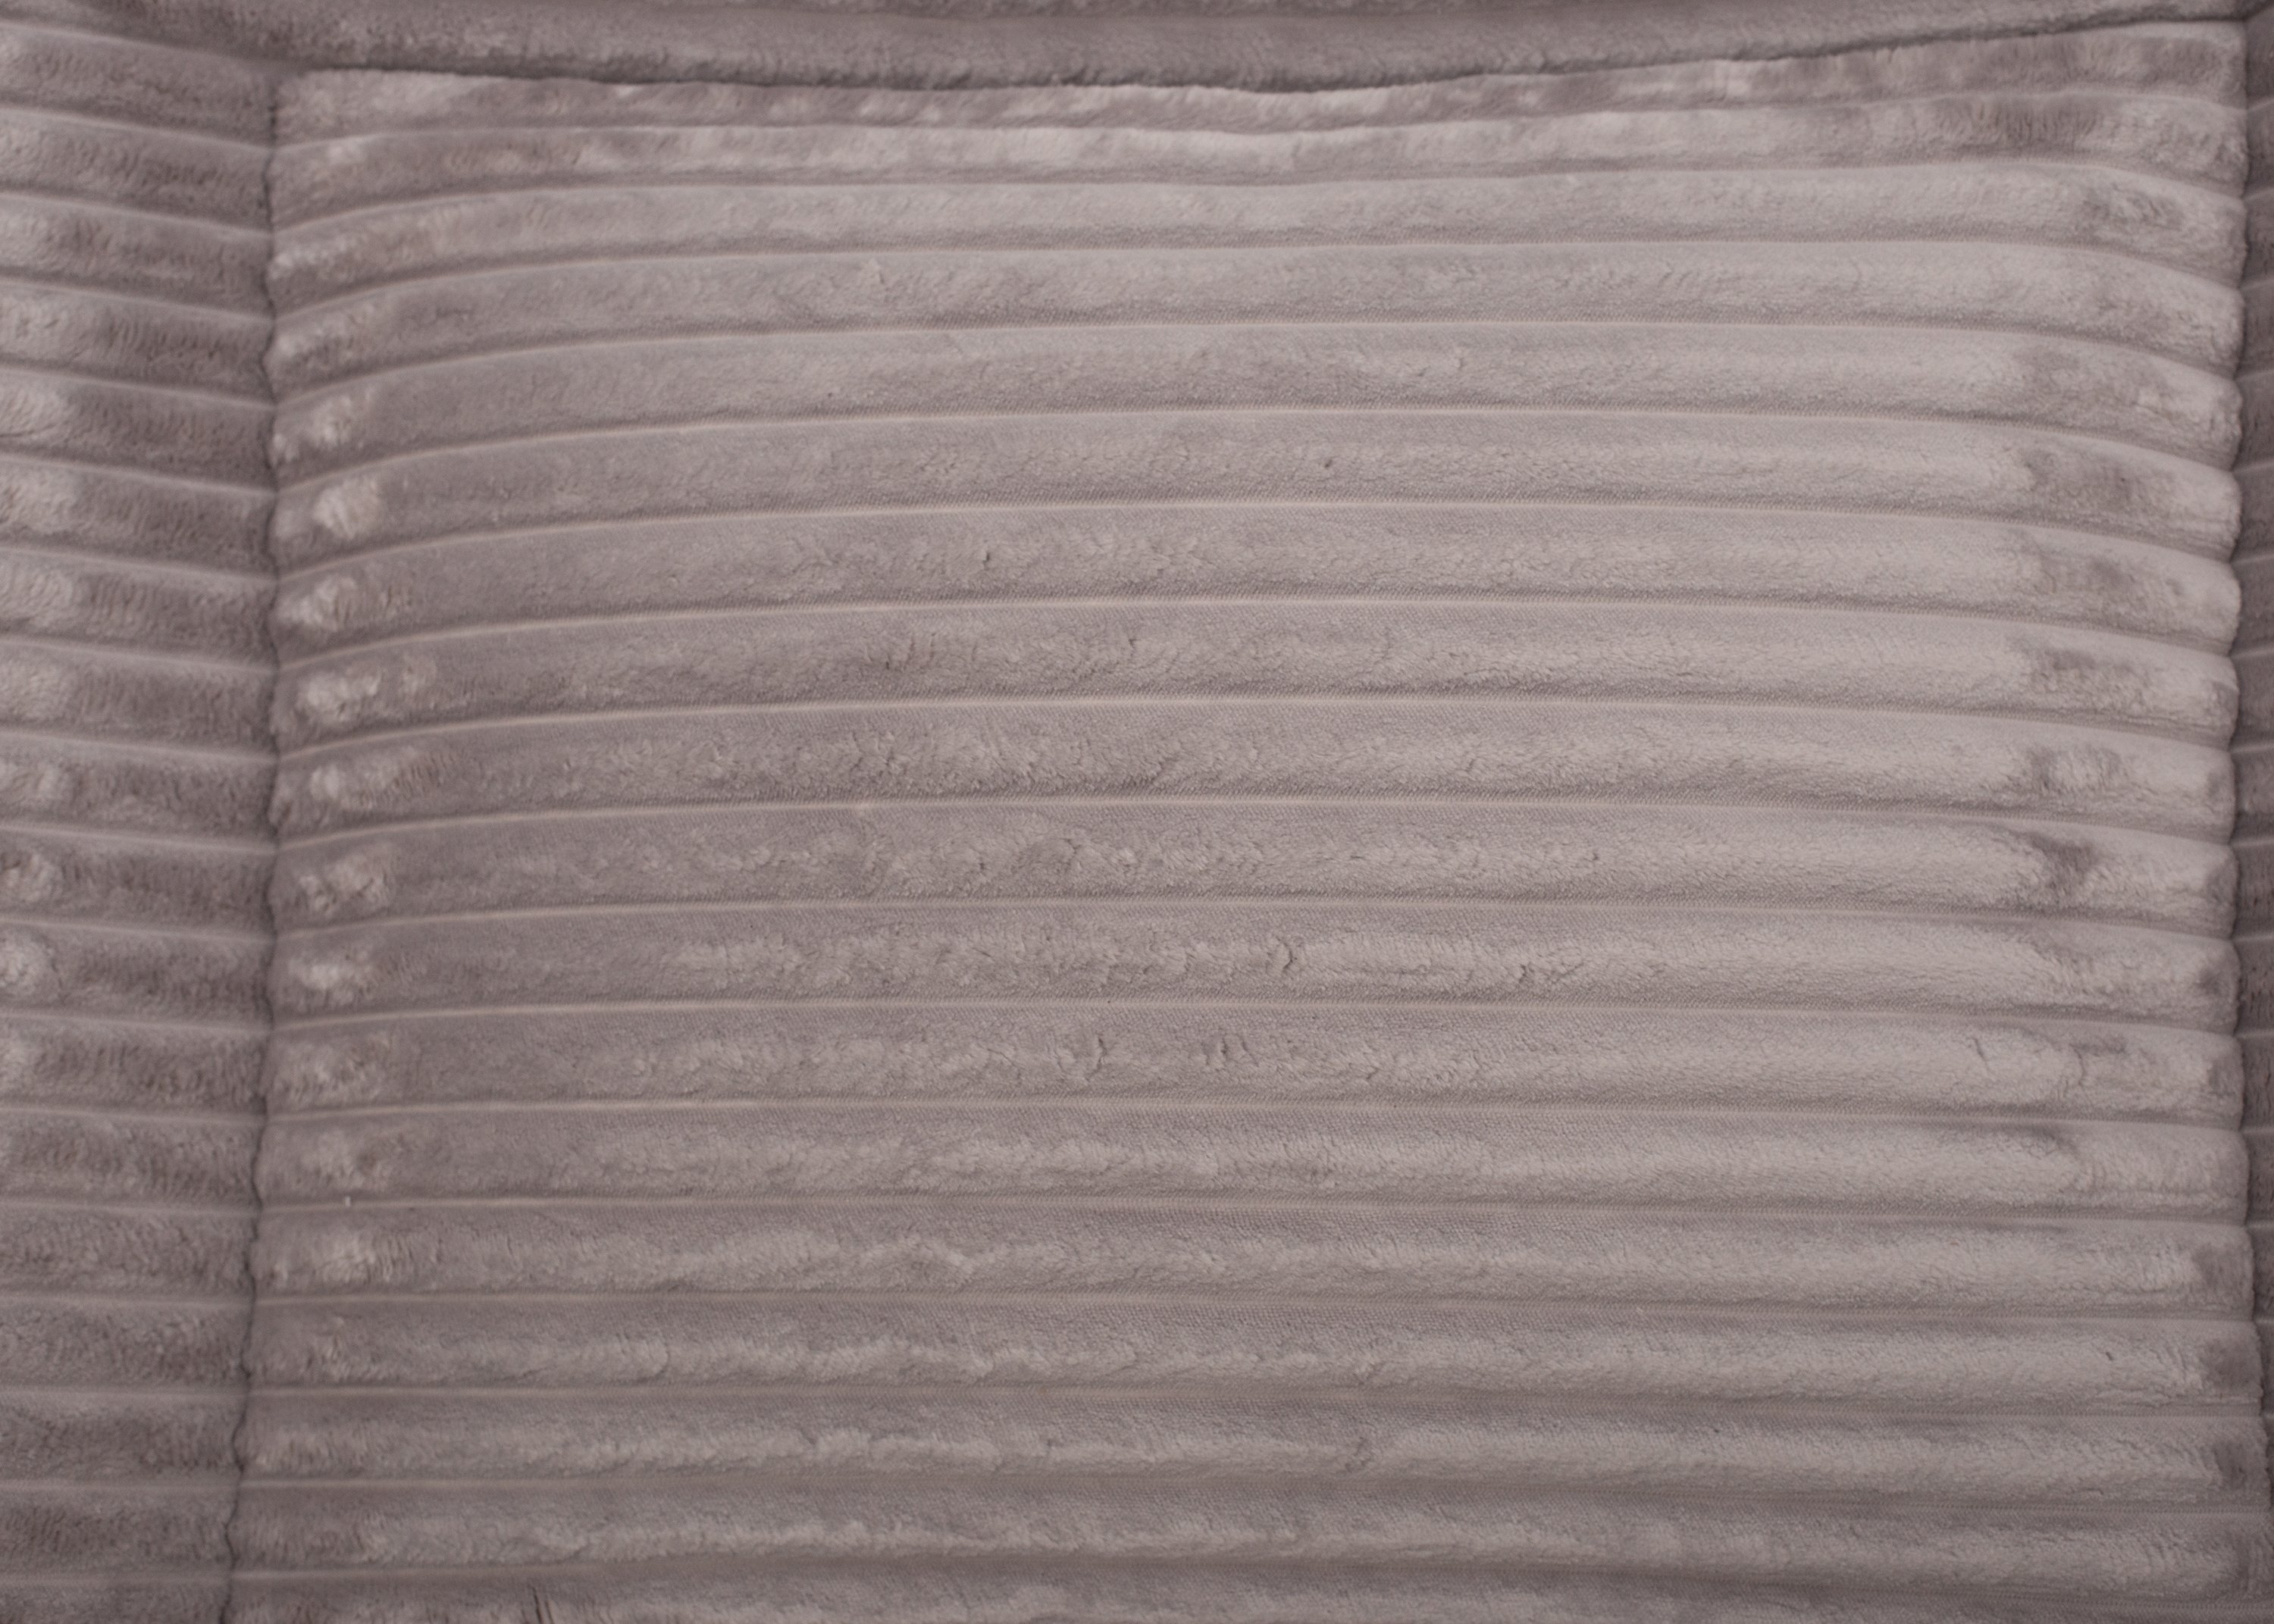 Wau-Bed Kuschelcord Light Grey Oval-S (80x60cm)